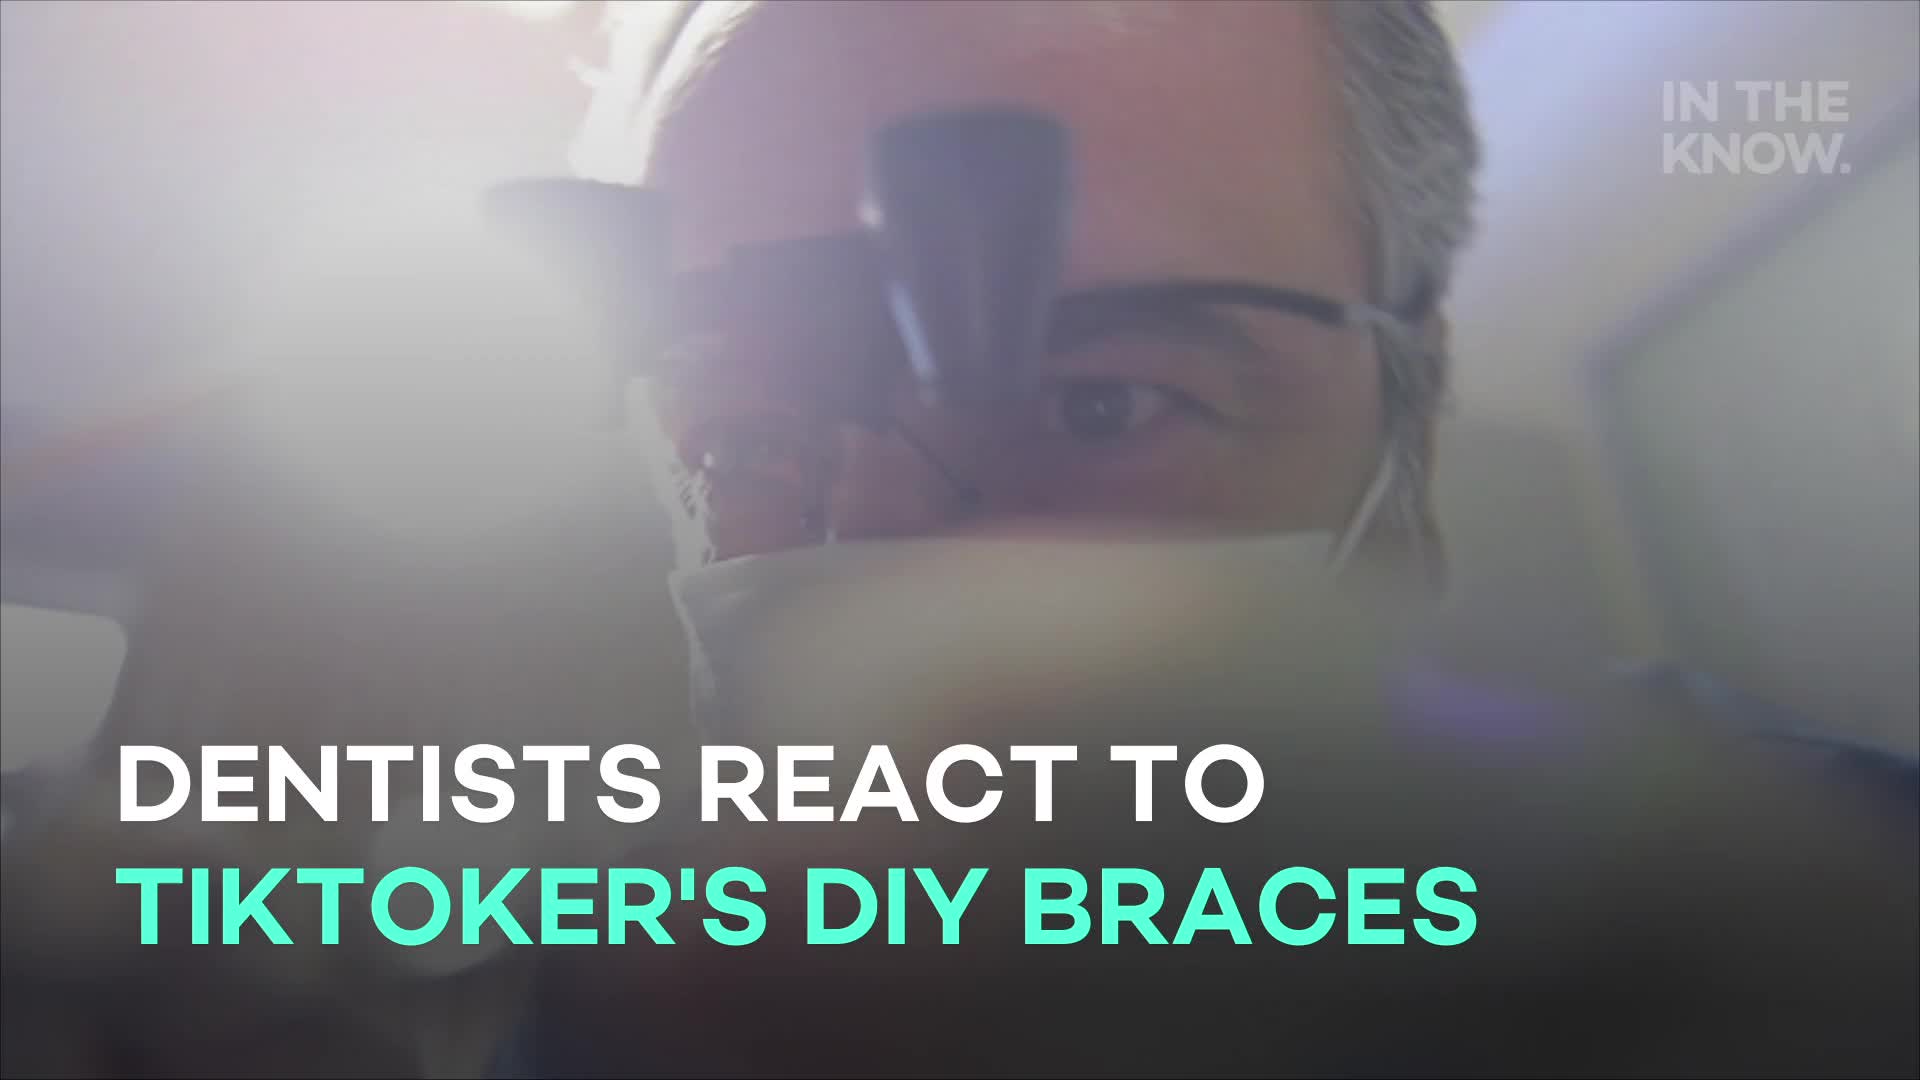 TikTok Users Making Risky DIY Dentures, Teeth Out of InstaMorph Beads